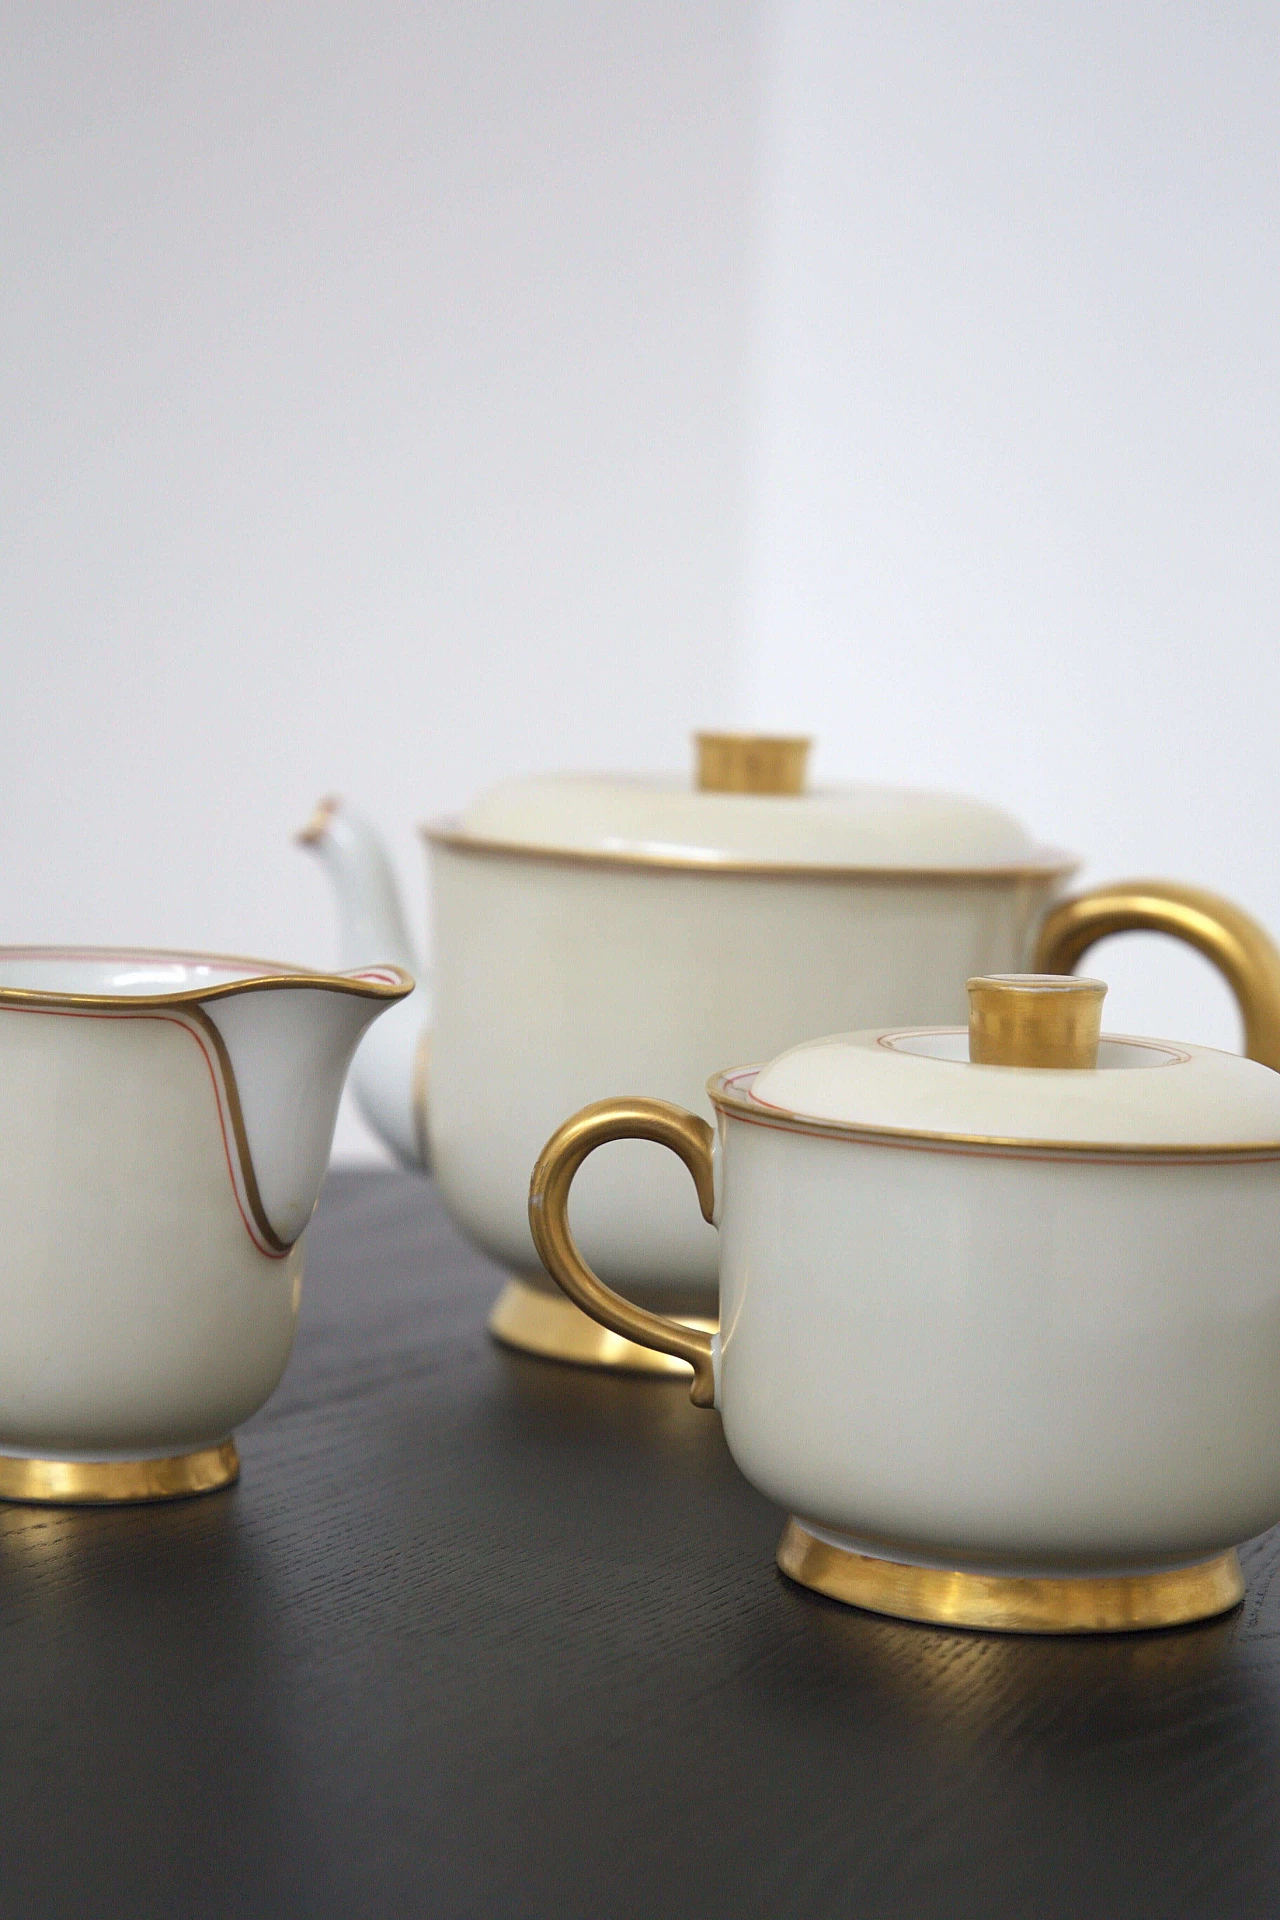 Ceramic and pure gold tea set by Gio Ponti for Ginori, 1930s 1477483